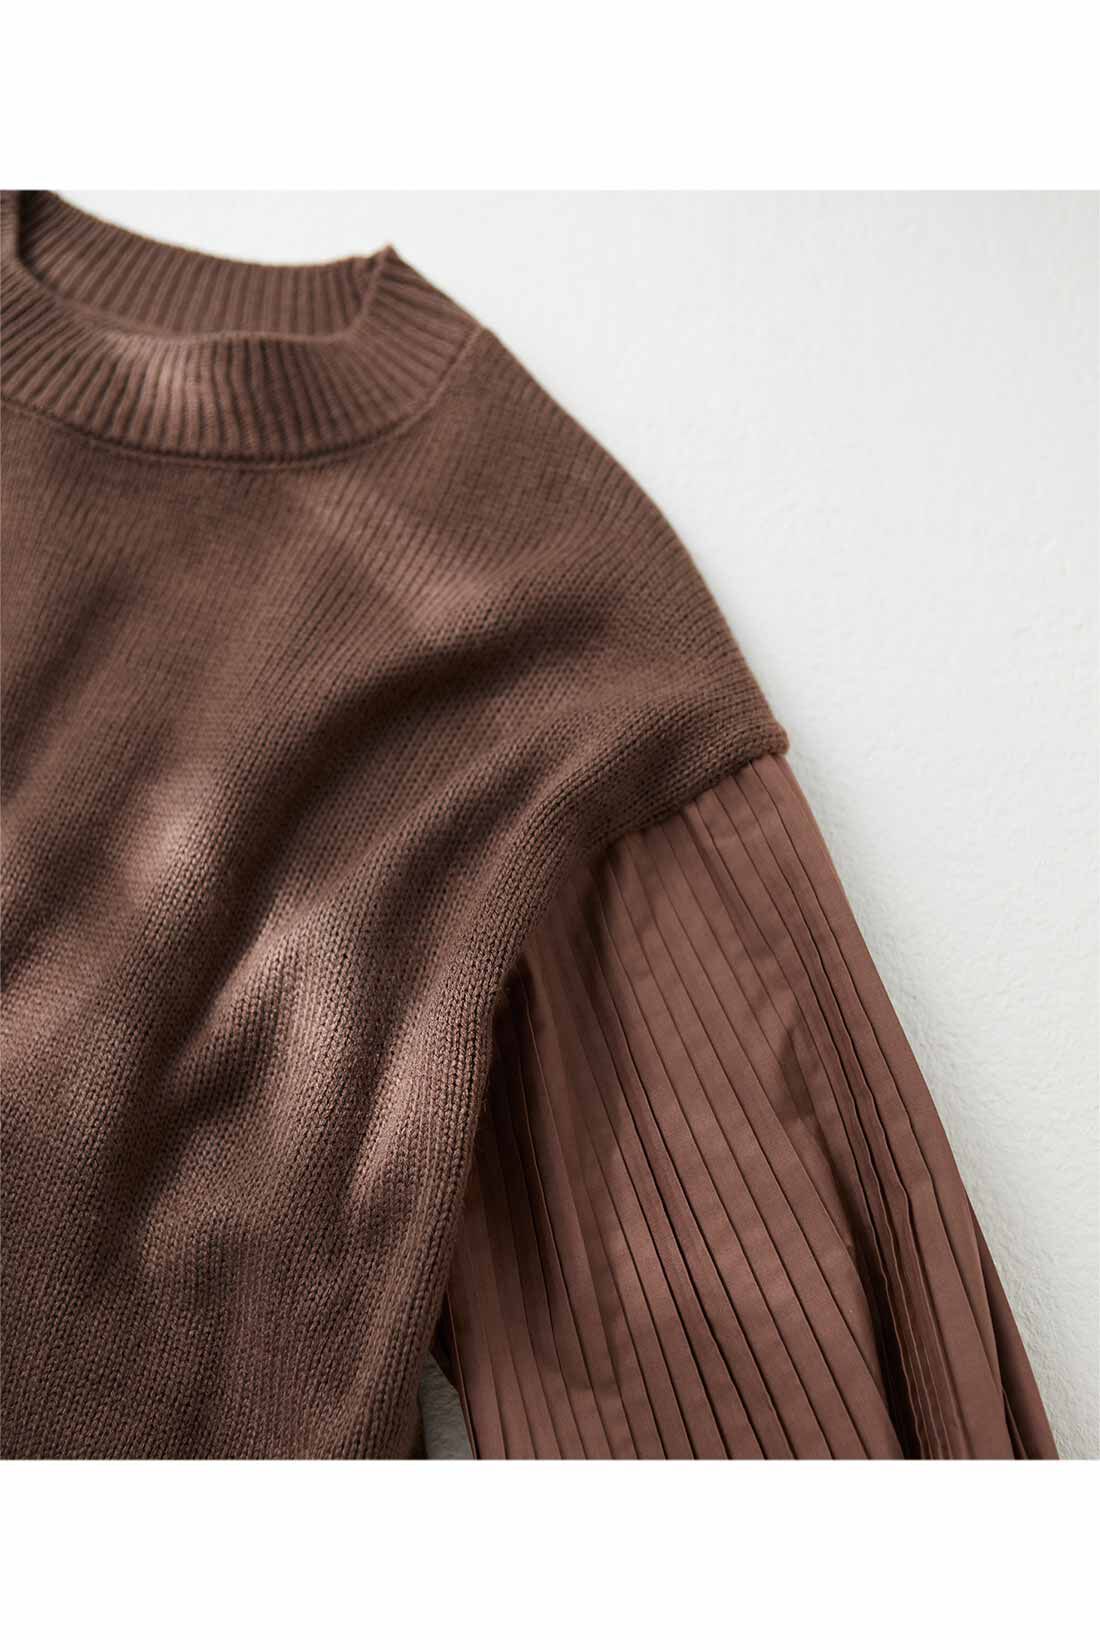 DRECO by IEDIT|【3～10日でお届け】IEDIT[イディット]　異素材切り替えのプリーツ袖ニットプルオーバー〈ブラウン〉|洗練モードな異素材遣い。身ごろはざっくり、軽い着心地のミドルゲージニット。袖は薄手の綿混で、プレーンな表情のシャツ素材をドッキング。